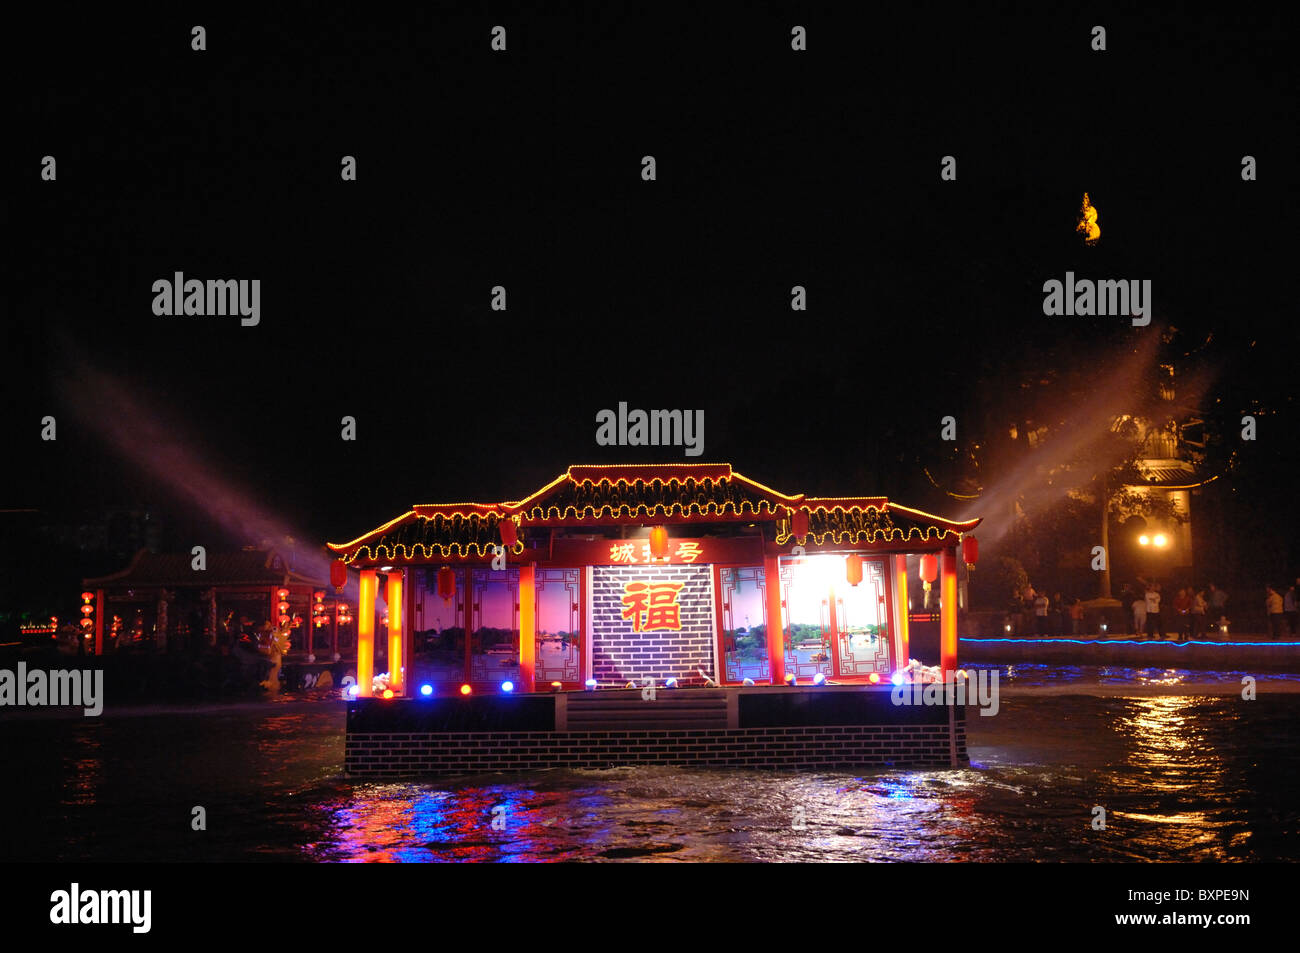 Traditional illuminated canal boat festival in Yangzhou Jiangsu Province of China Stock Photo